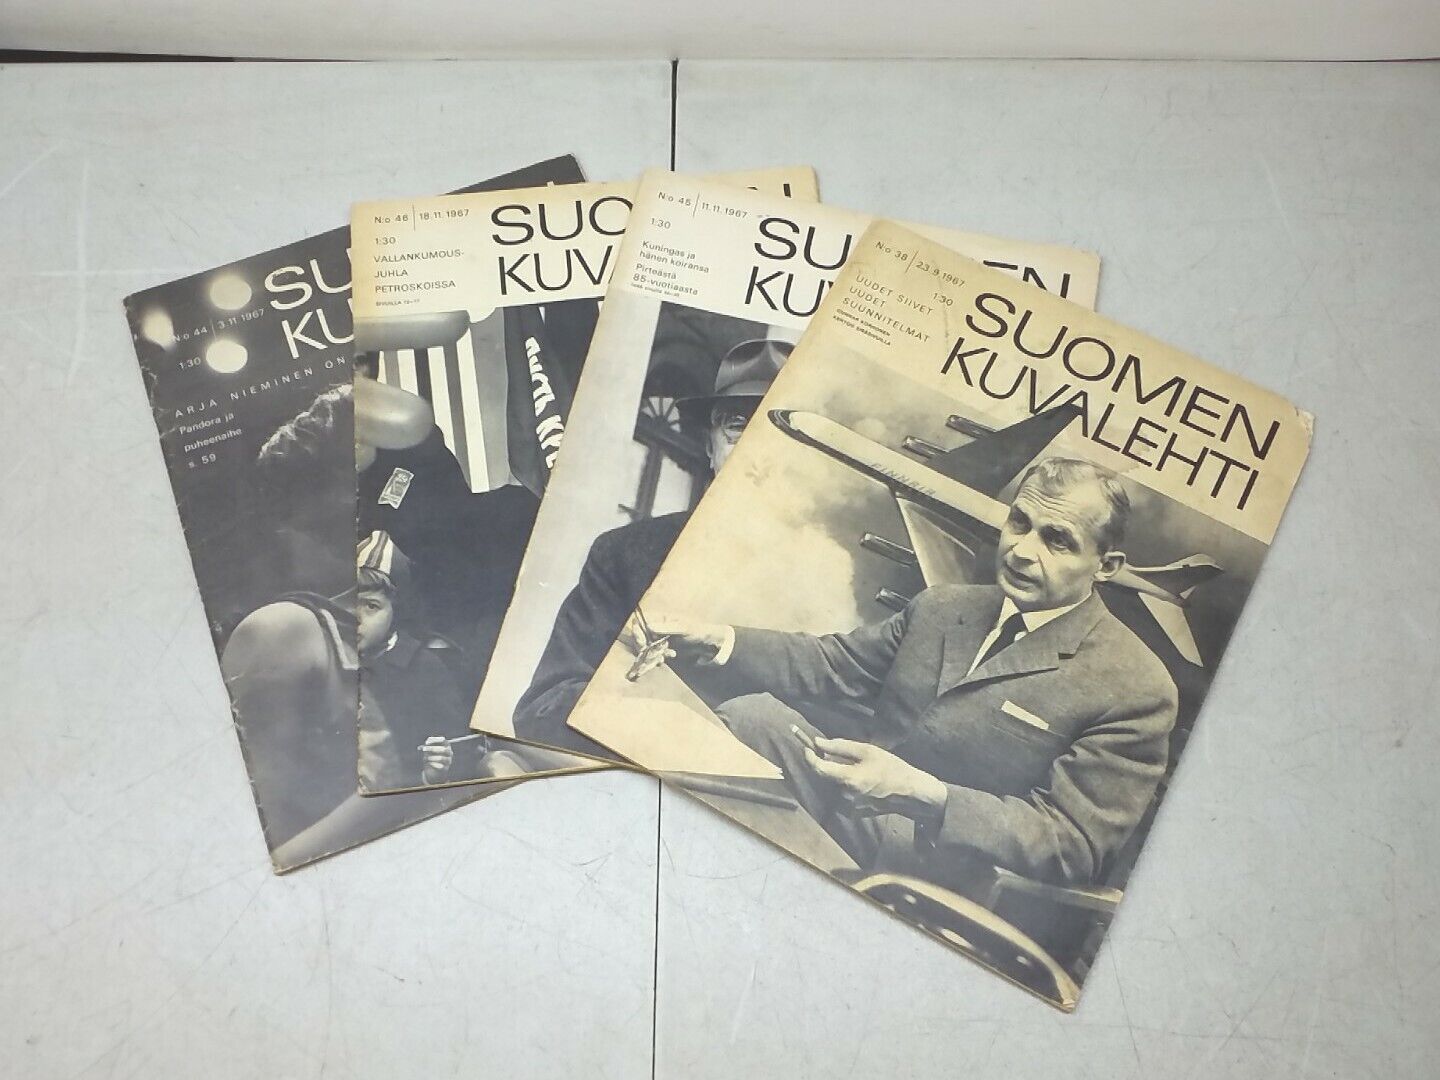 Suomen Kuvalehti Finnish Language Weekly Magazine Qty 4 Vintage 1967 Editions